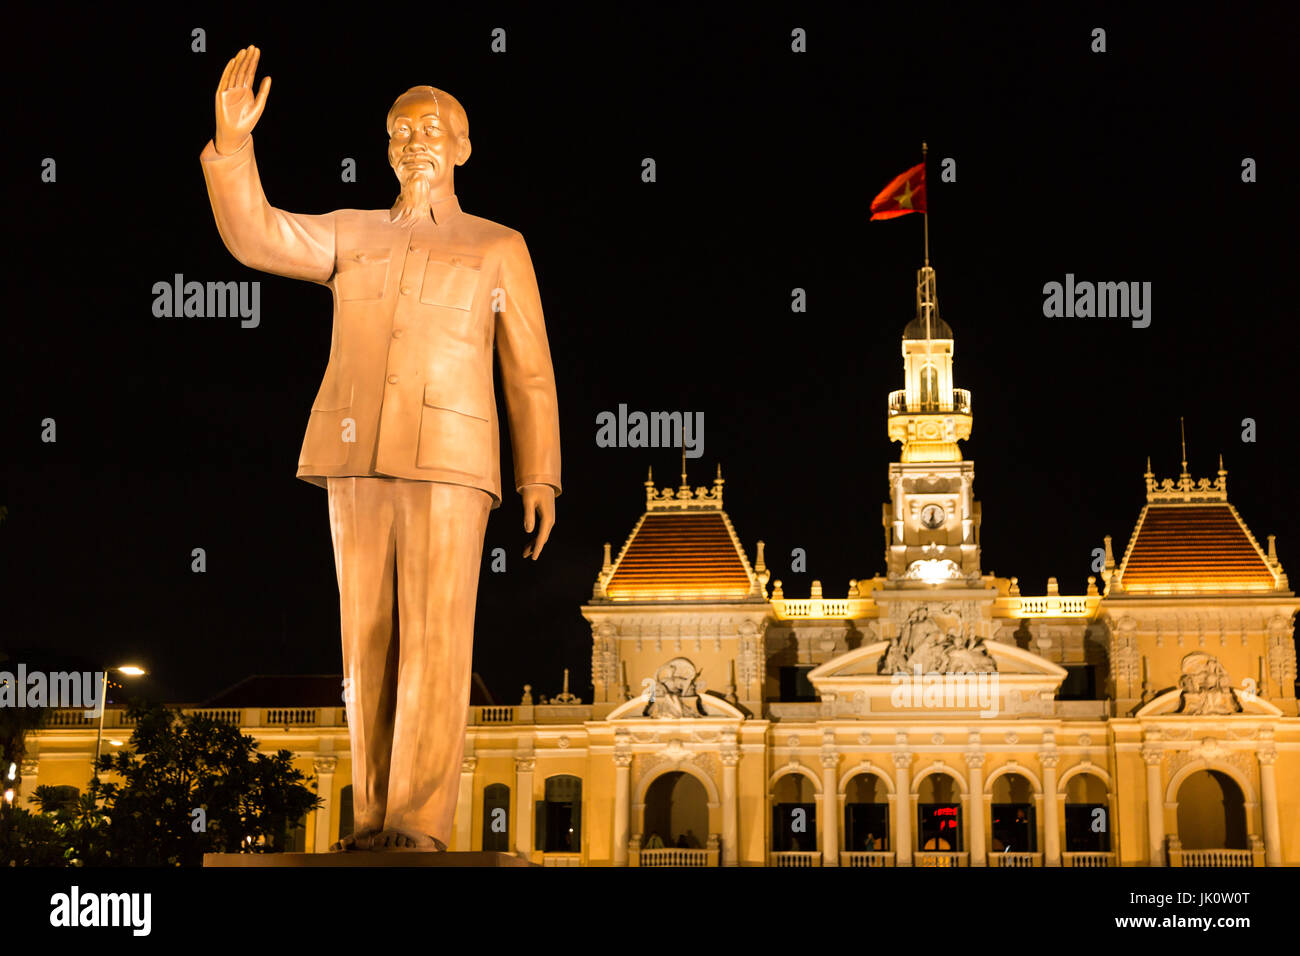 Bronzestatue des Präsidenten Ho Chi Minh vor dem Rathaus - Ho-Chi-Minh-Stadt, Vietnam - März 2017 Stockfoto